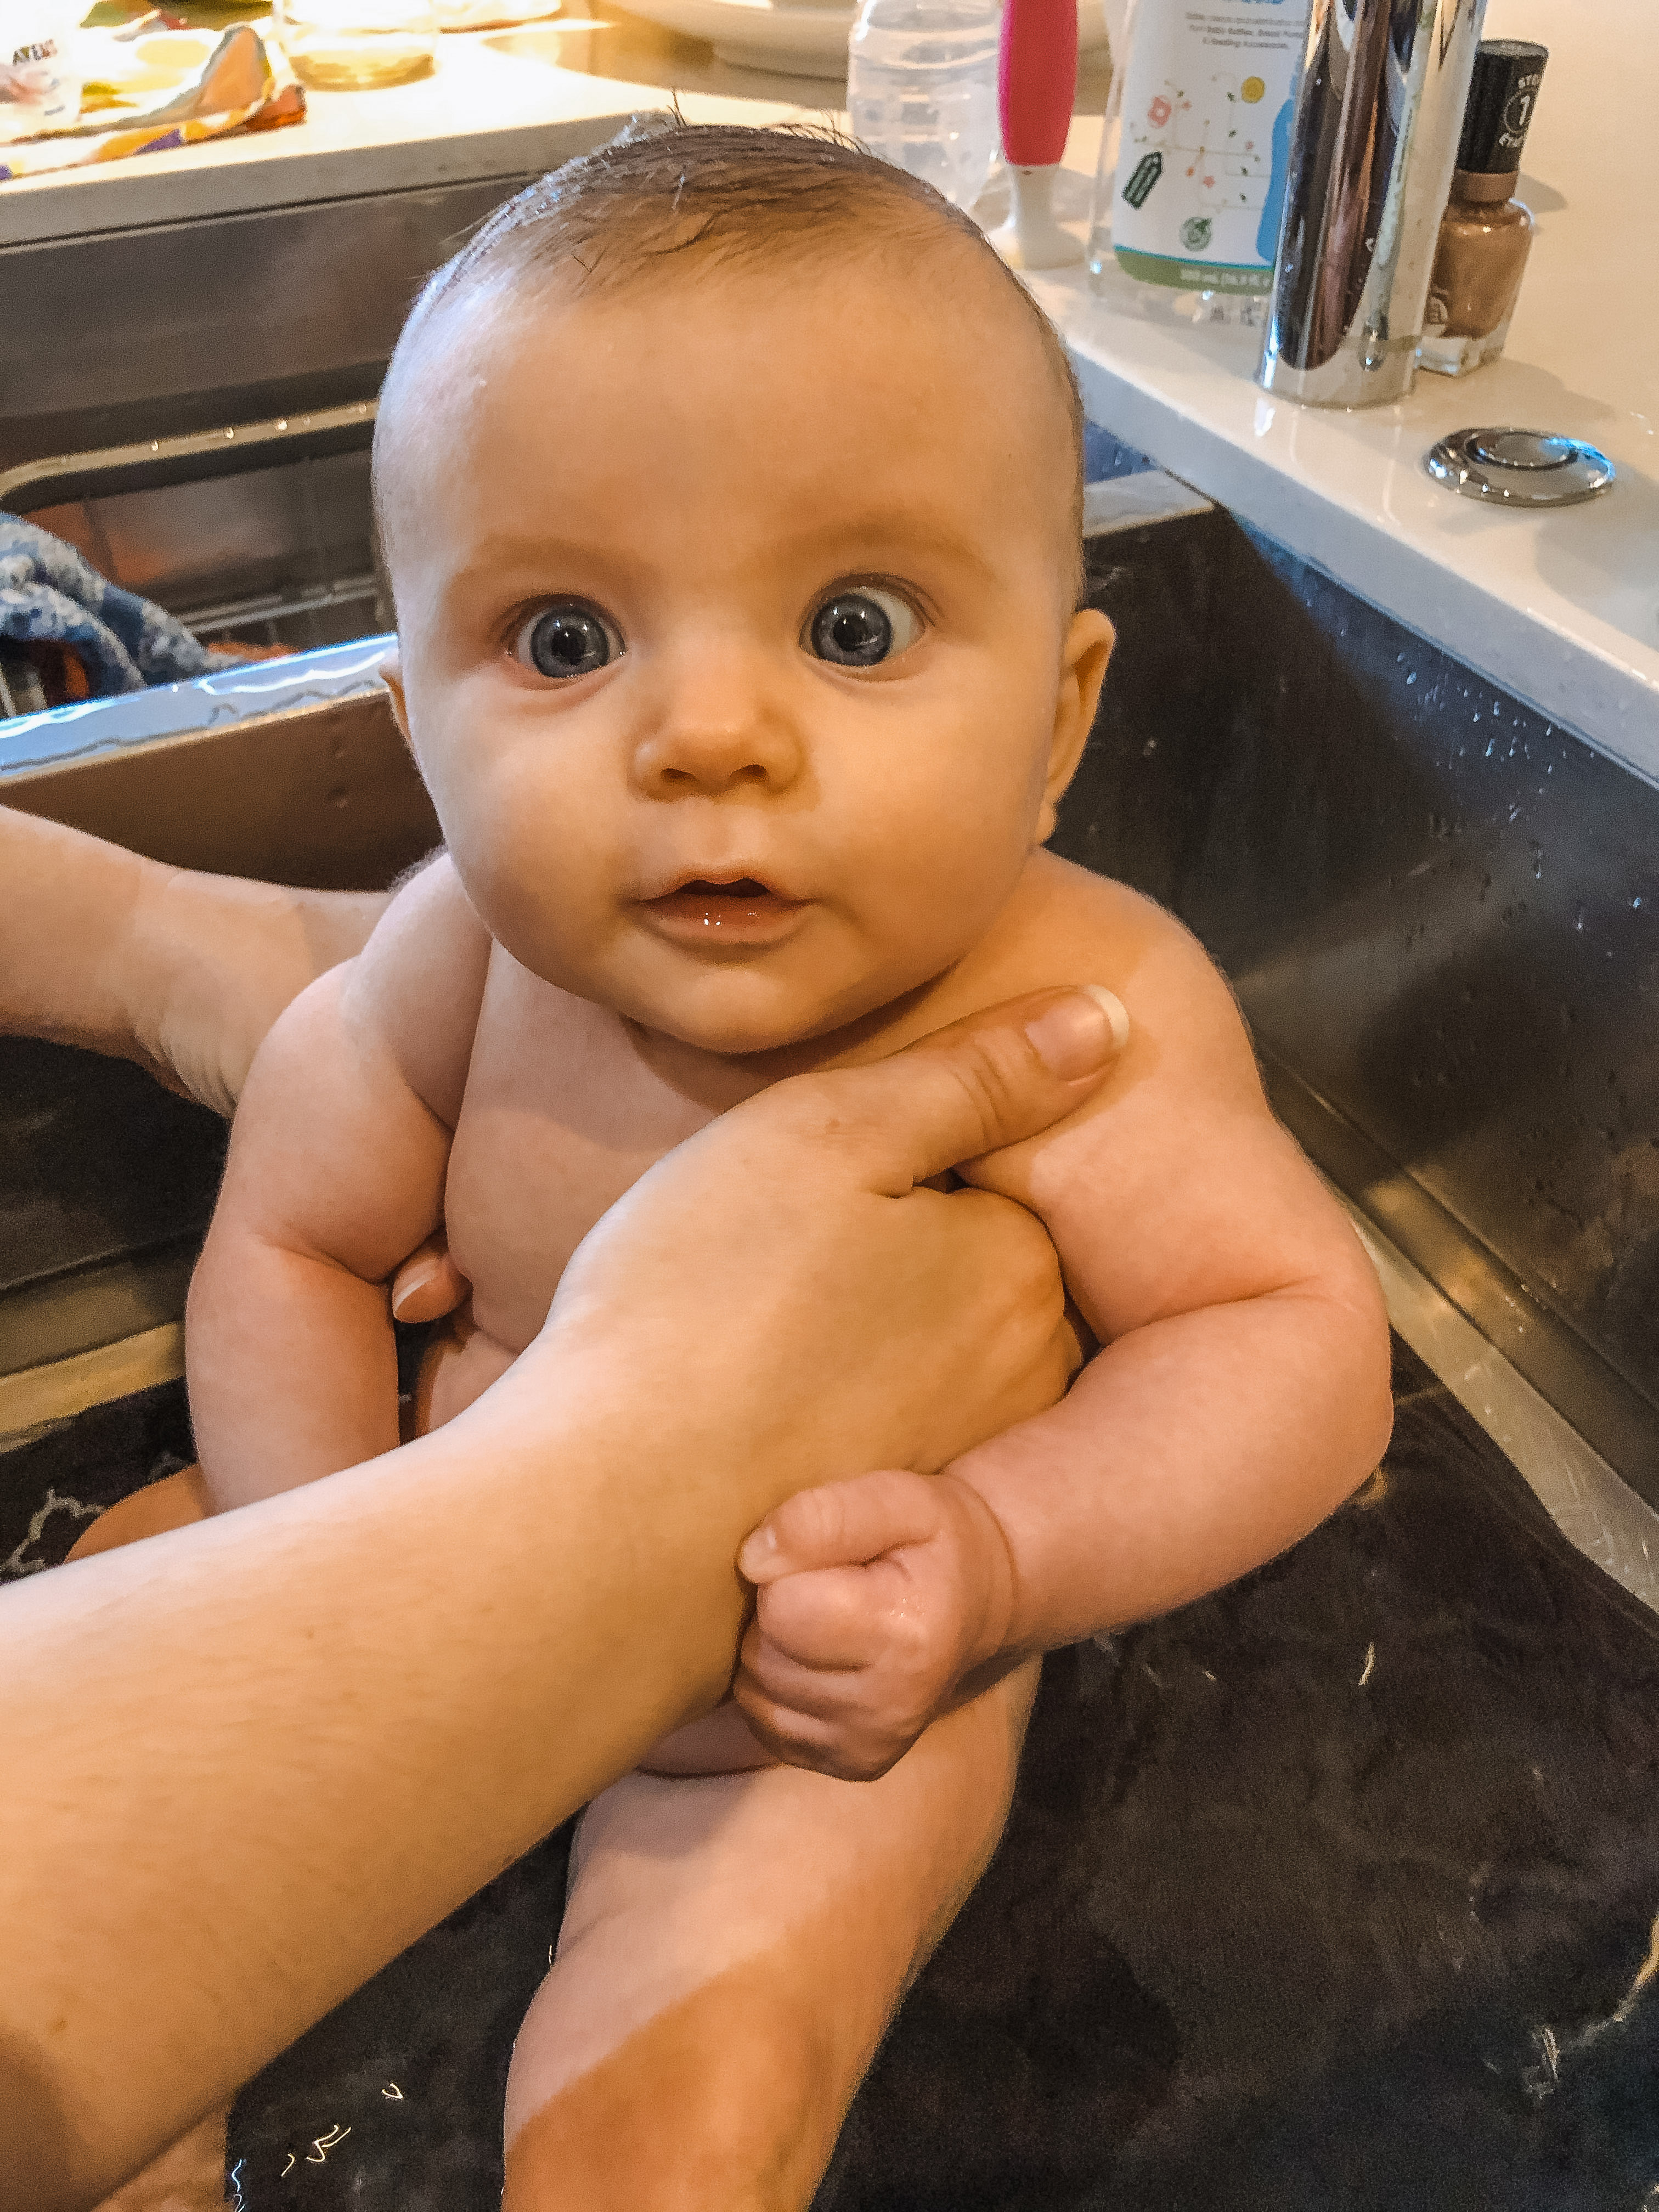 Baby having sink bath